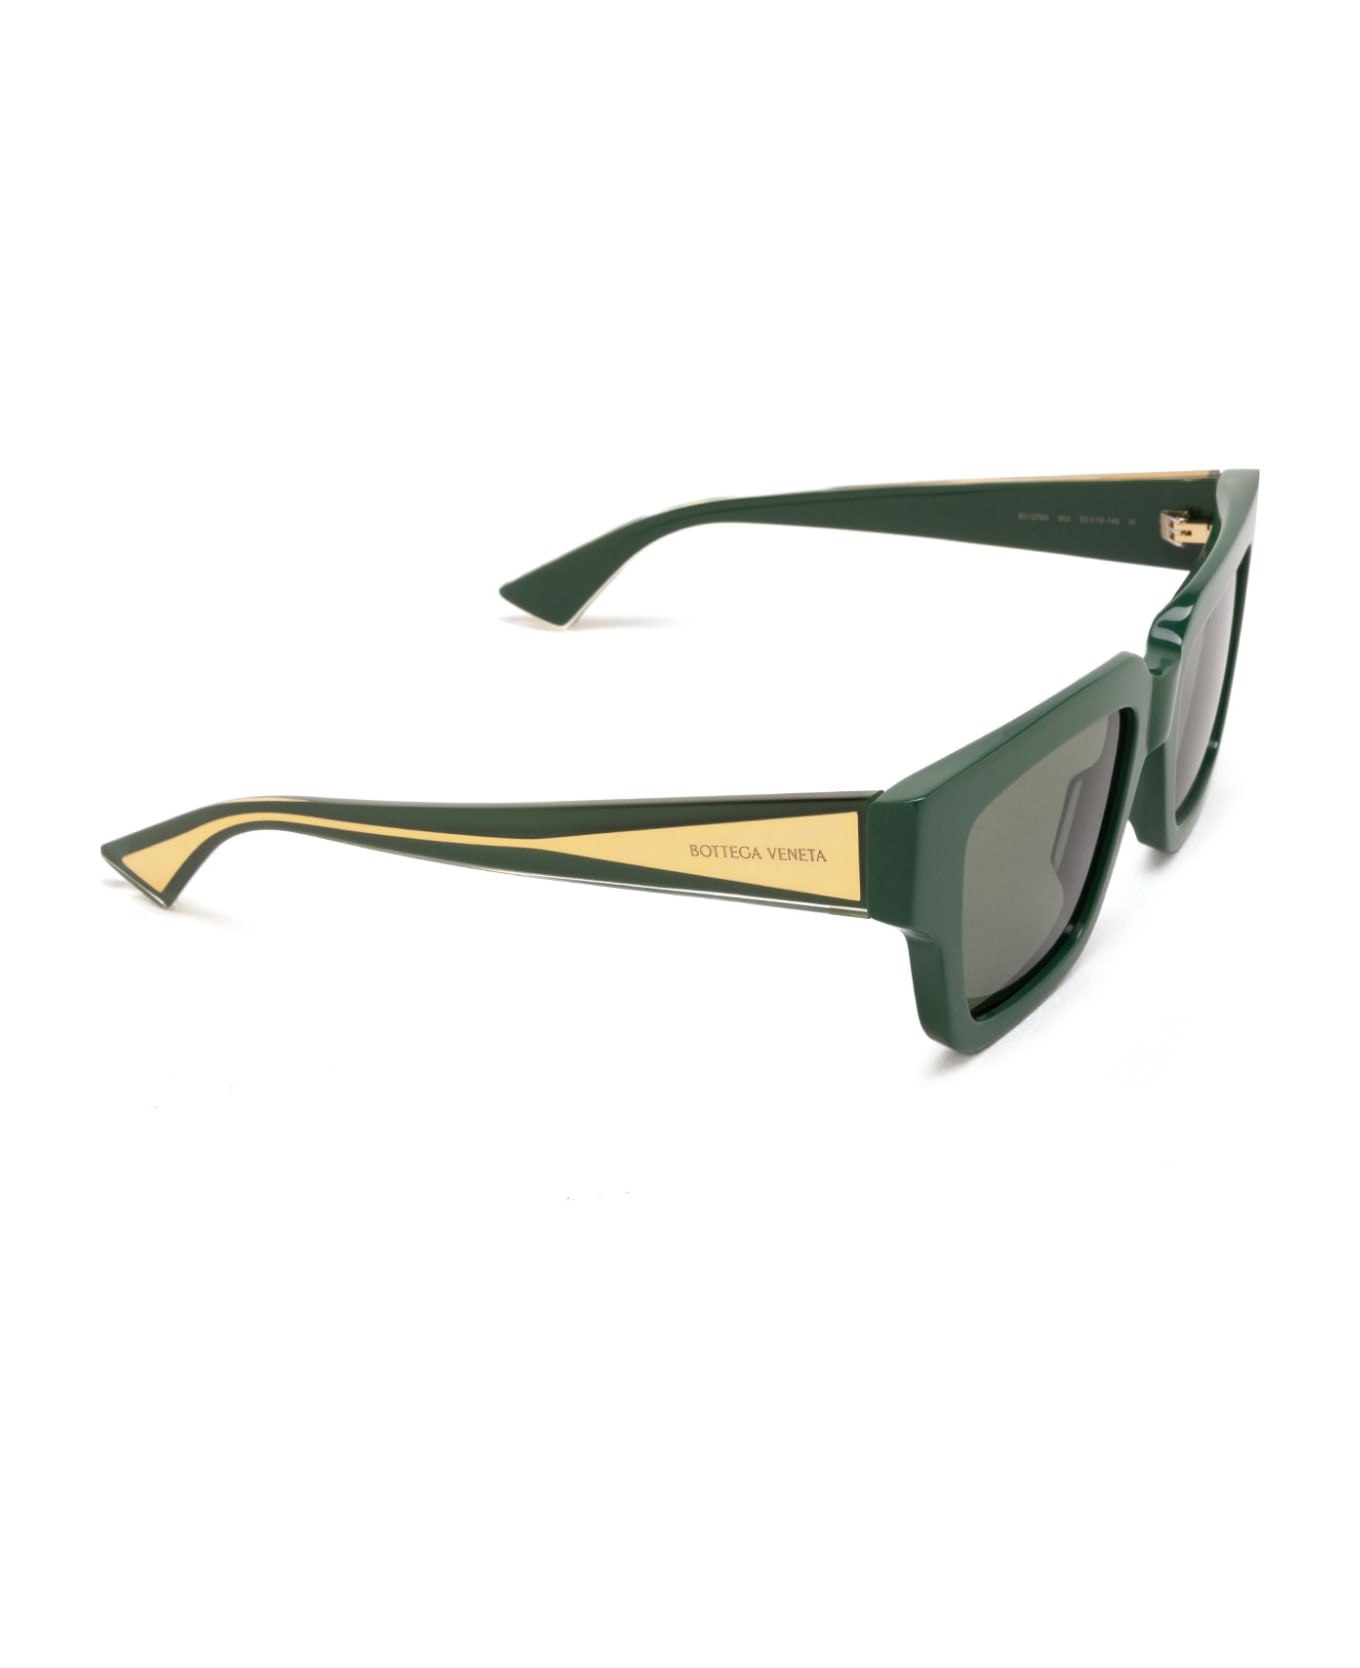 Bottega Veneta Eyewear Bv1276s Green Sunglasses - Green サングラス